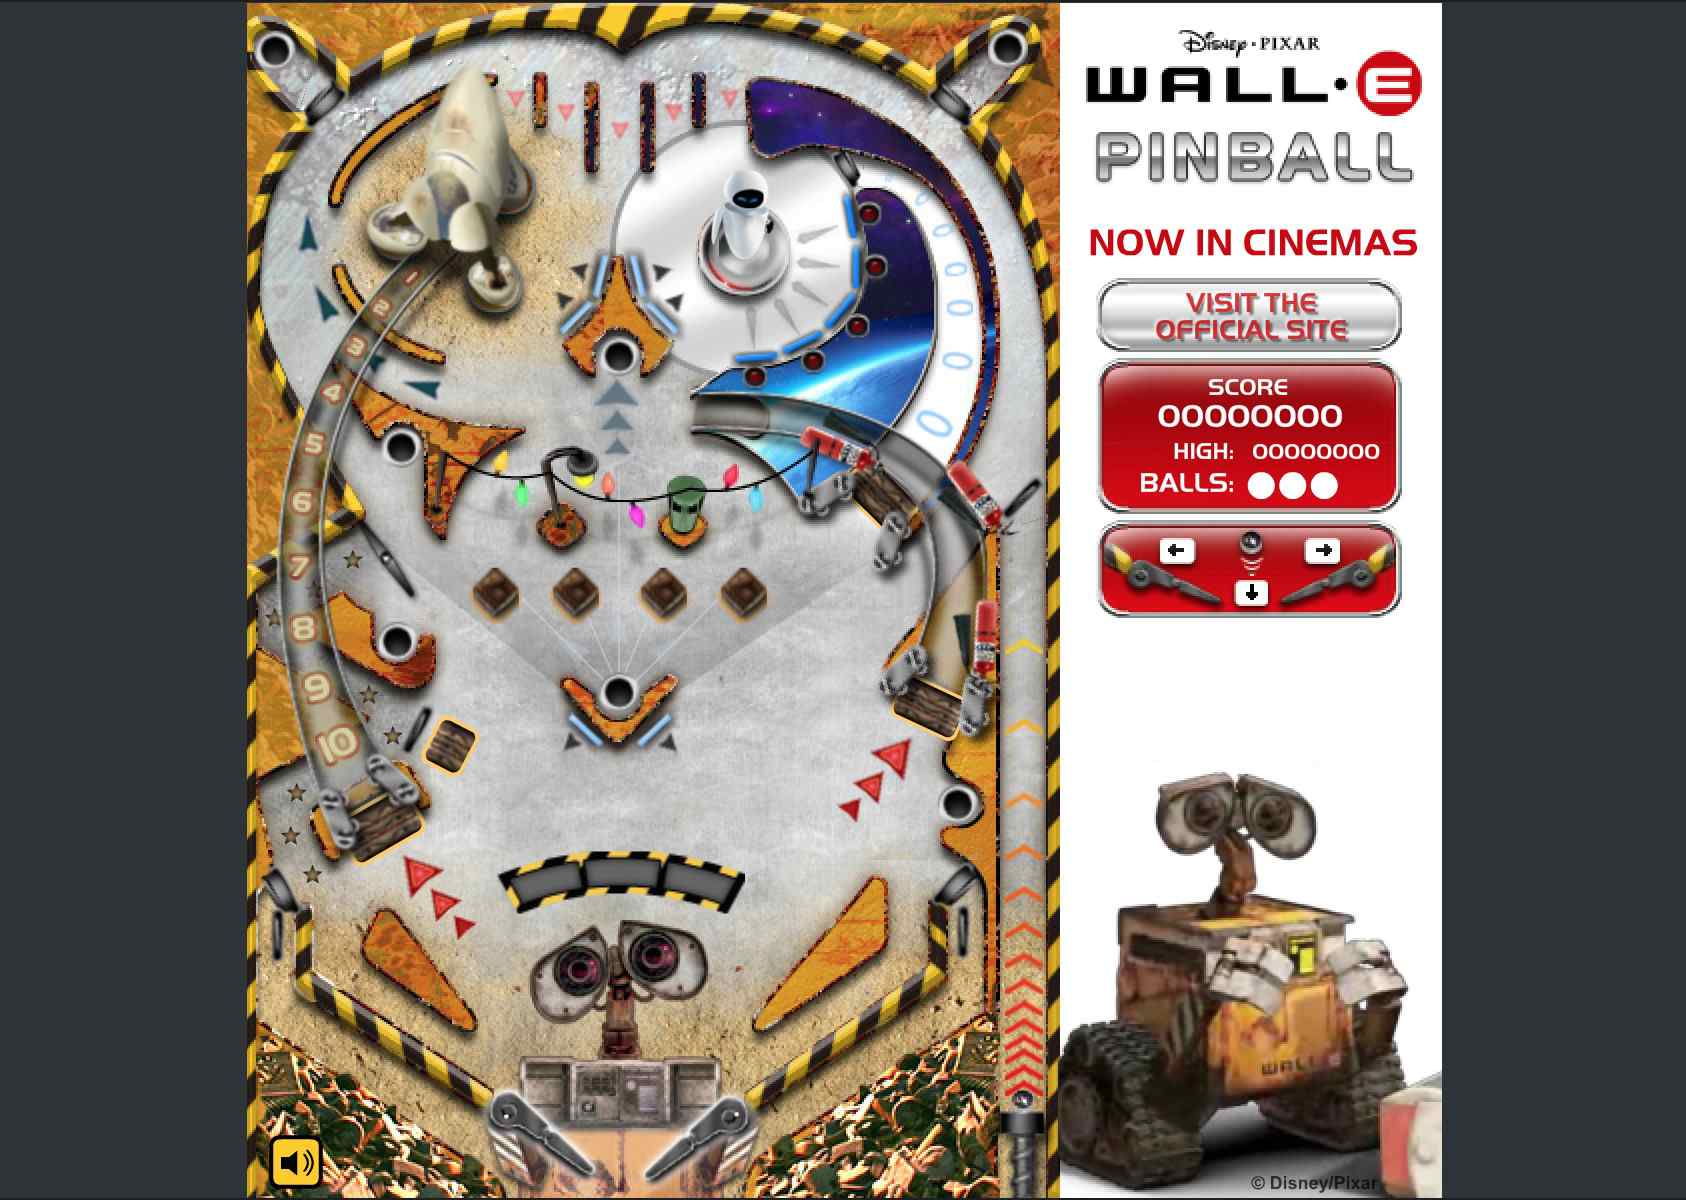 Wall-E Pinball webpagina